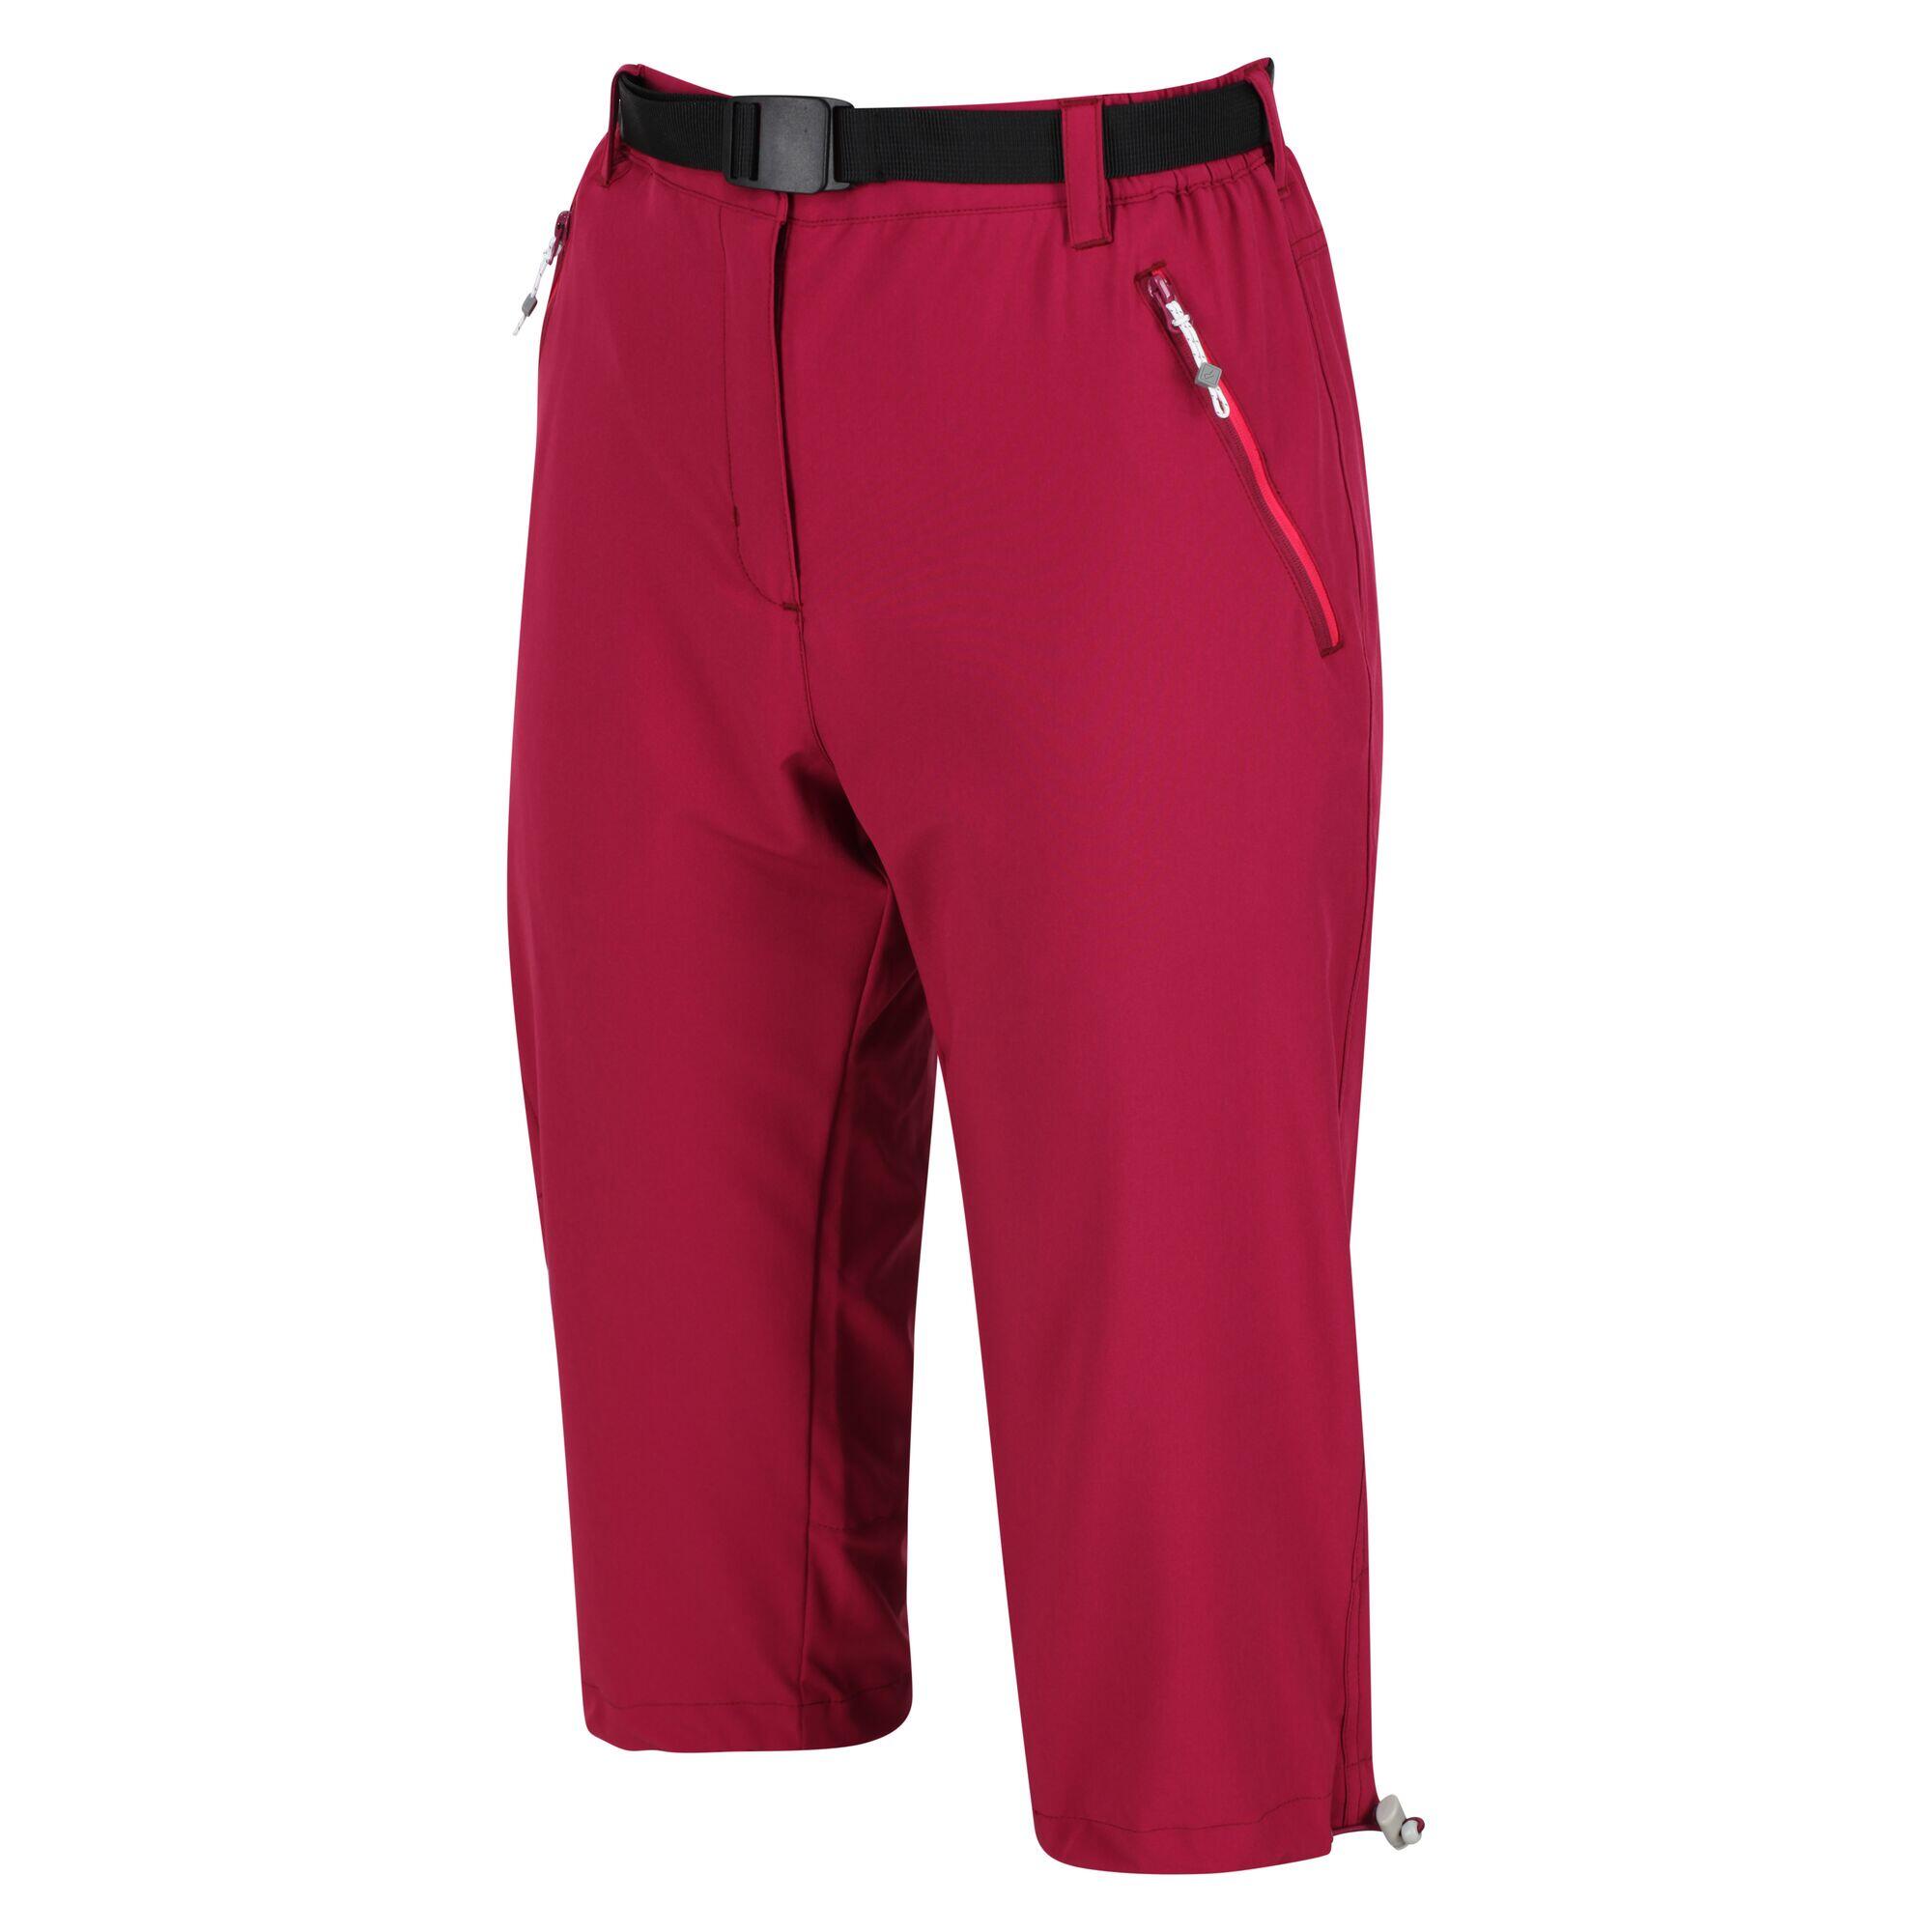 Xert Stretch Women's Walking Capris - Pink Plum 1/7